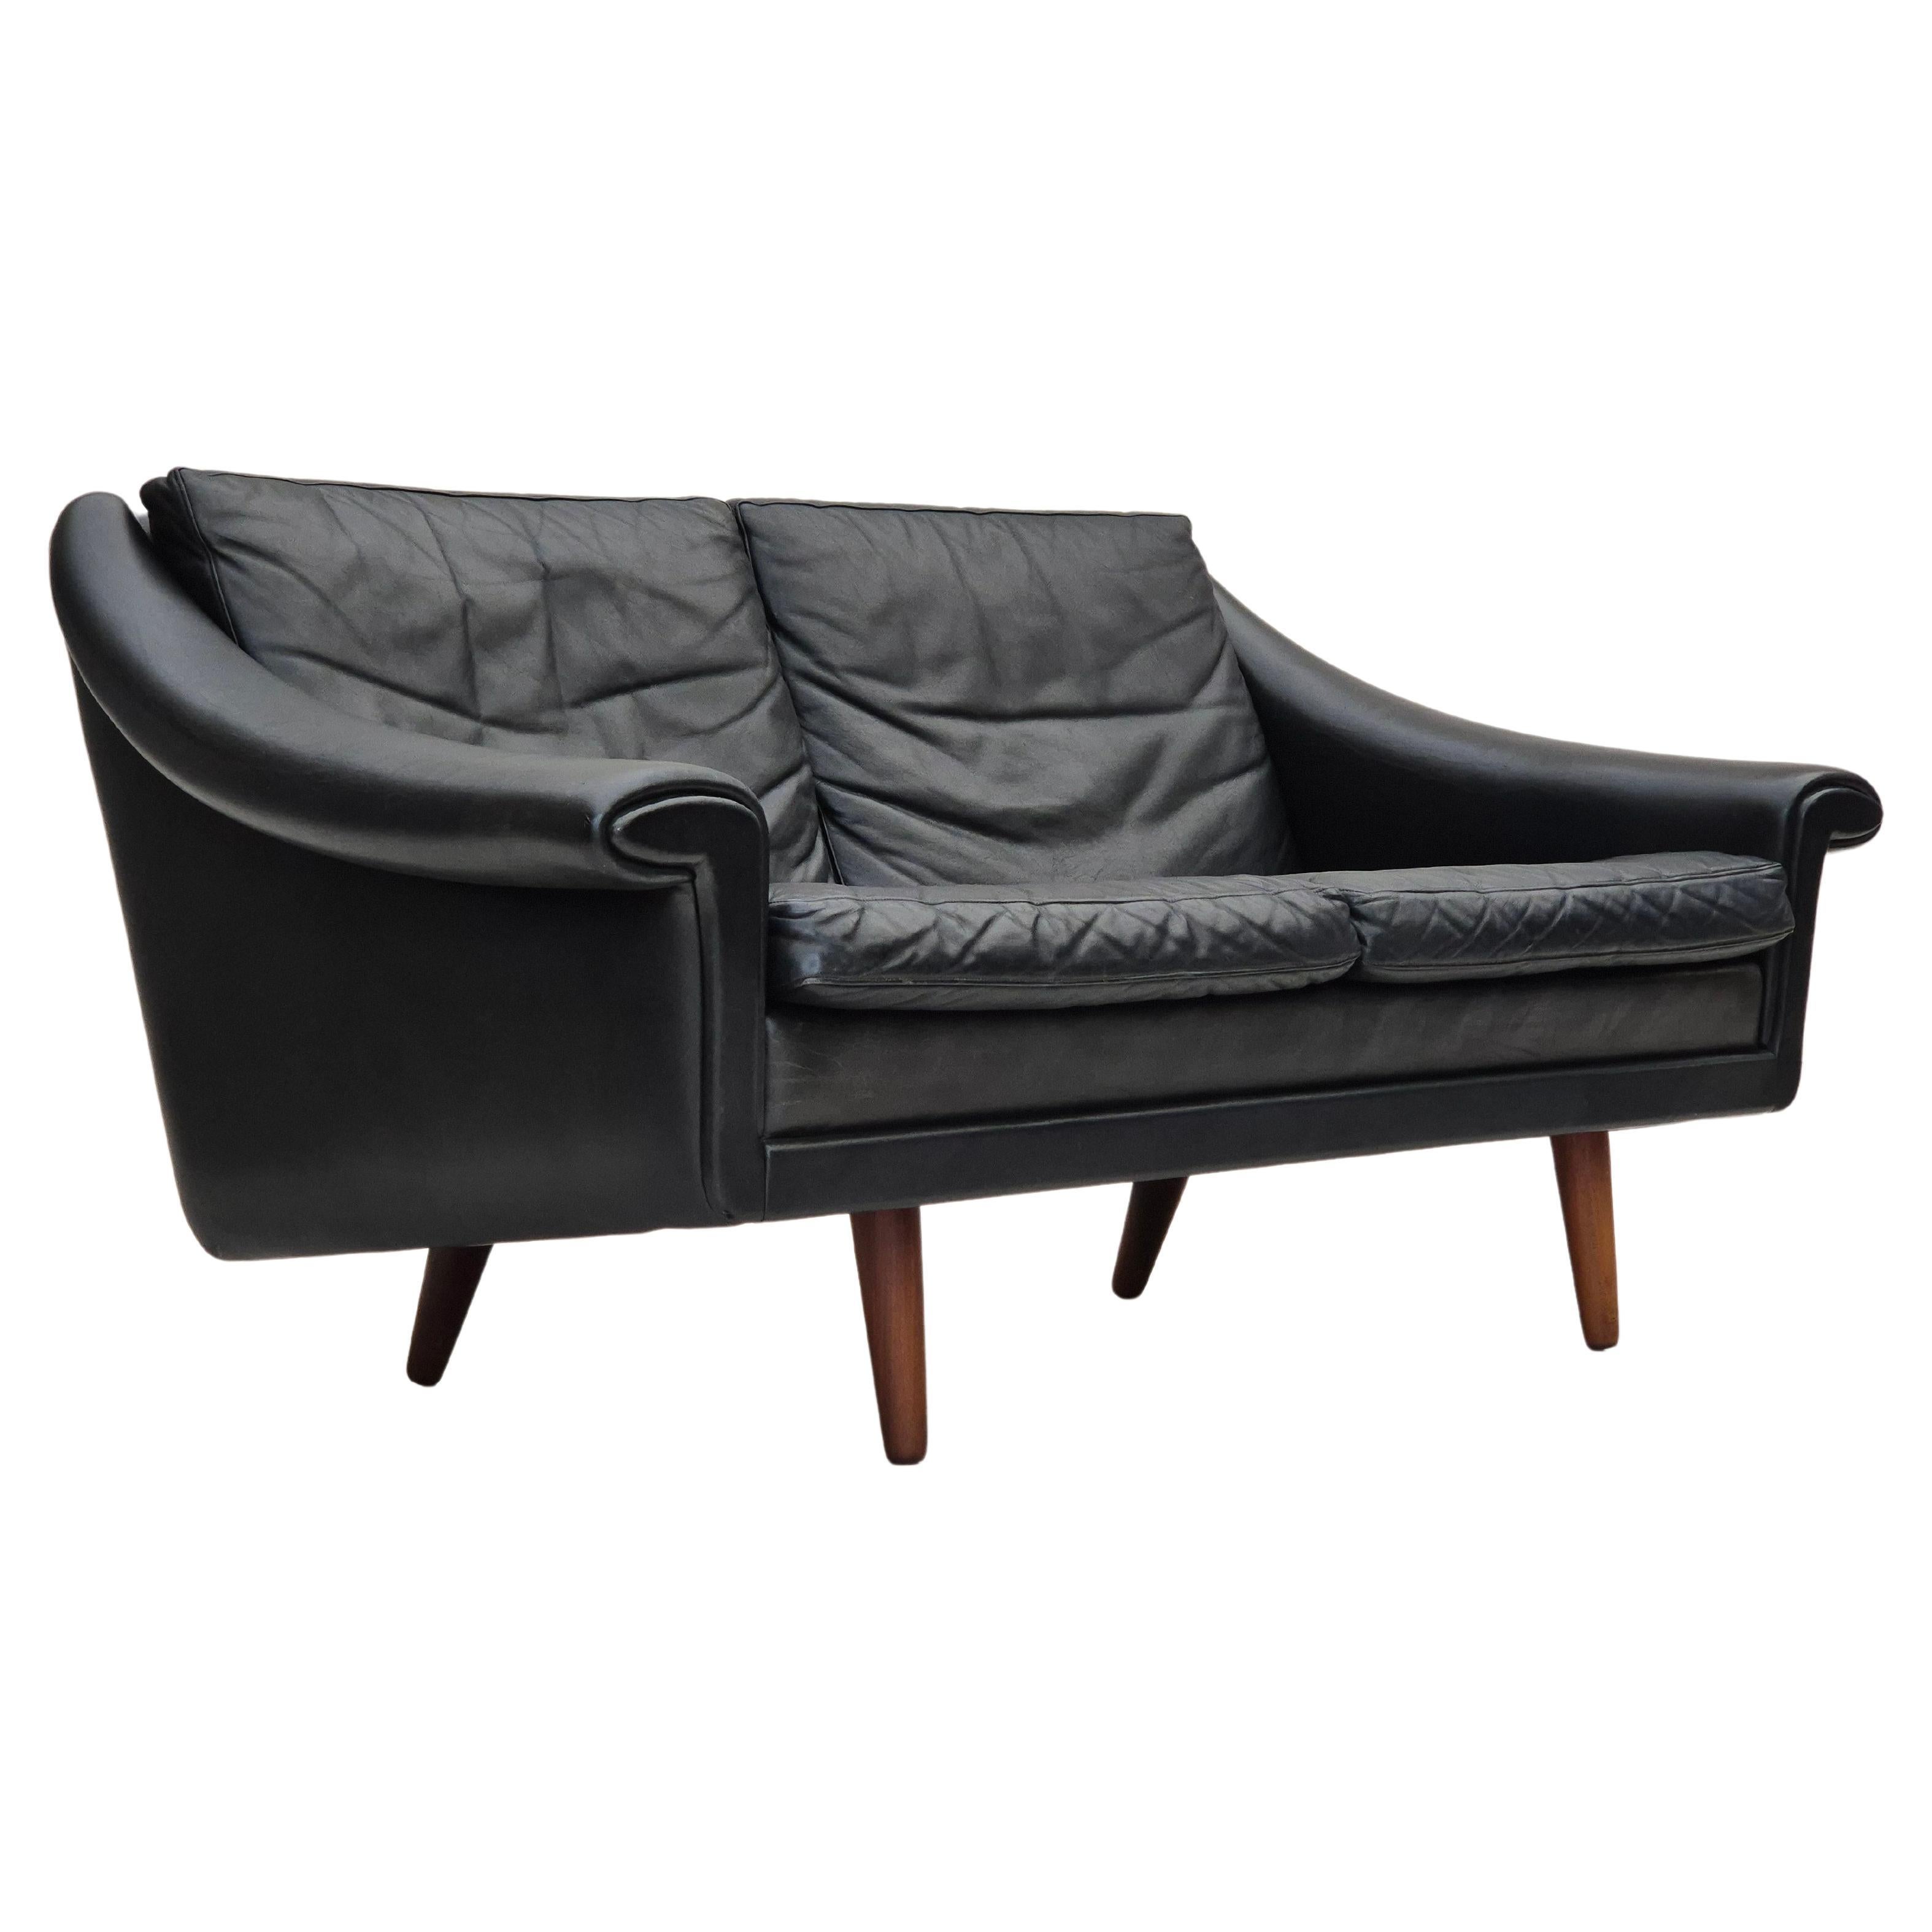 1960s, Danish design, Aage Christiansen for Erhardsen & Andersen, 2 seater sofa. For Sale